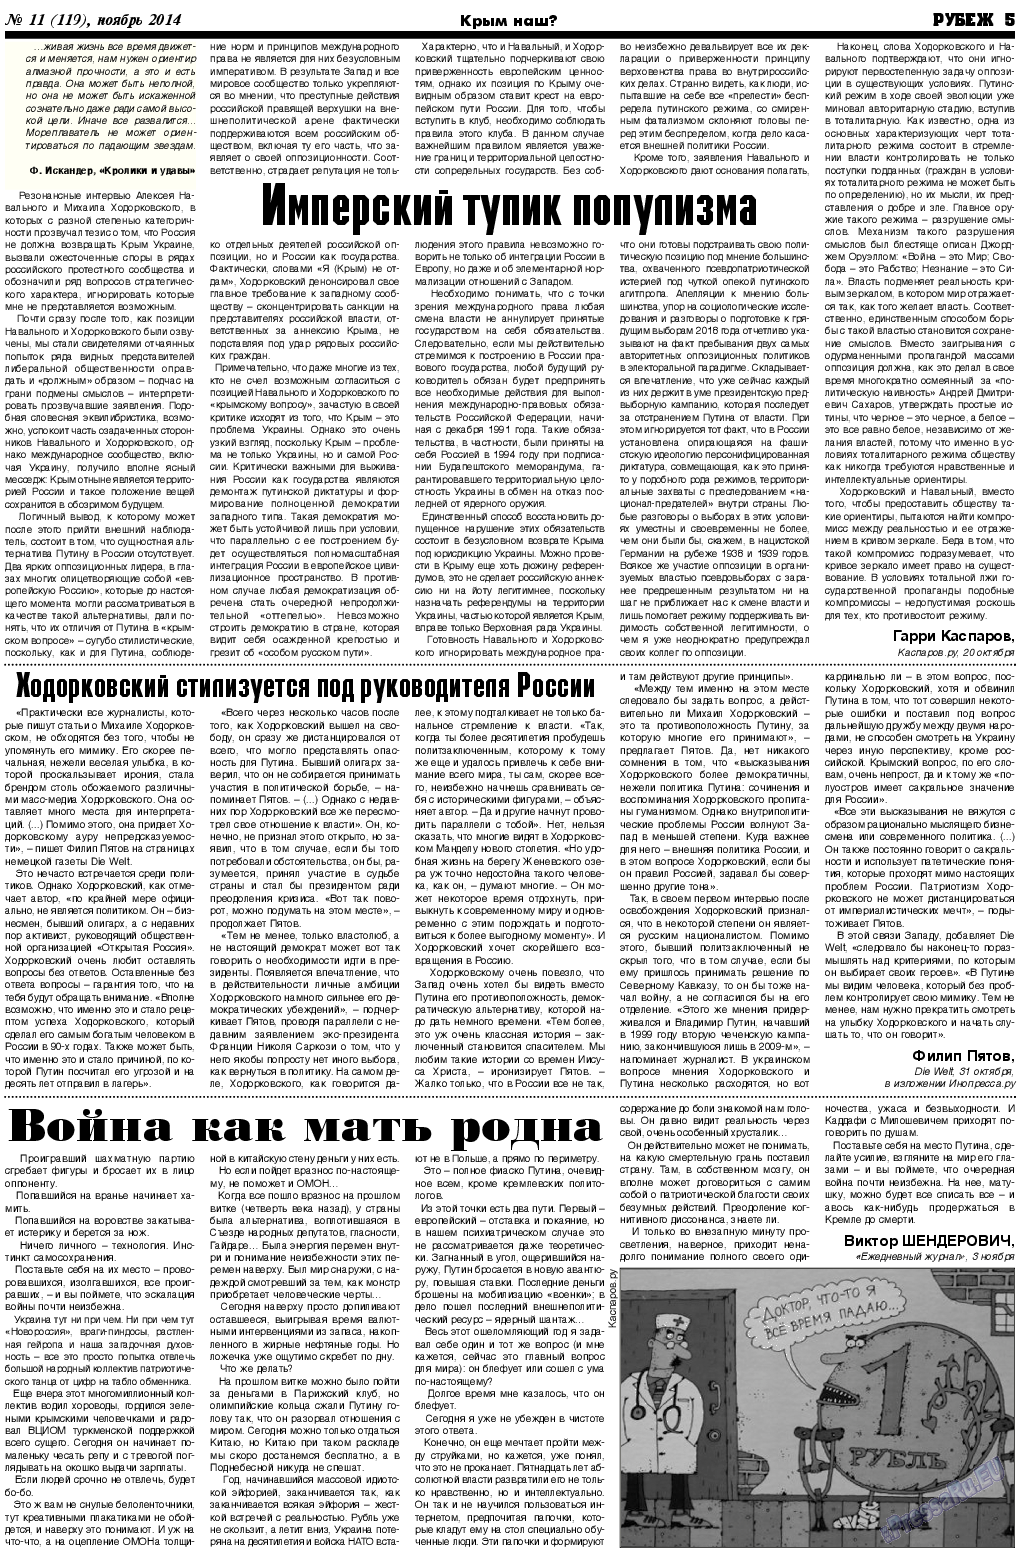 Рубеж, газета. 2014 №11 стр.5